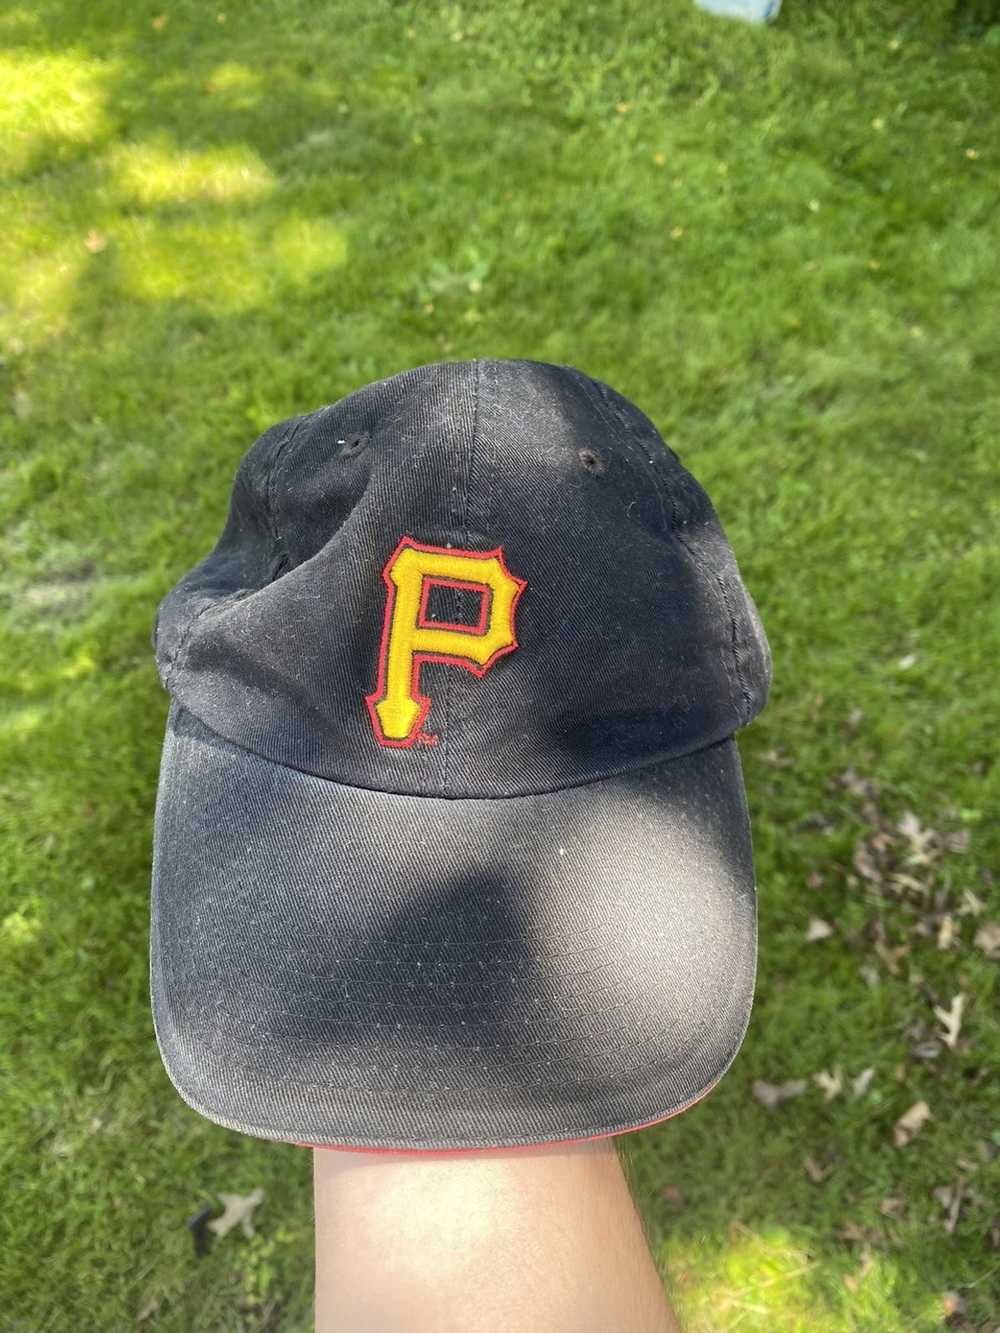 Vintage Pittsburgh Pirates “Cooperstown” Pillbox Hat